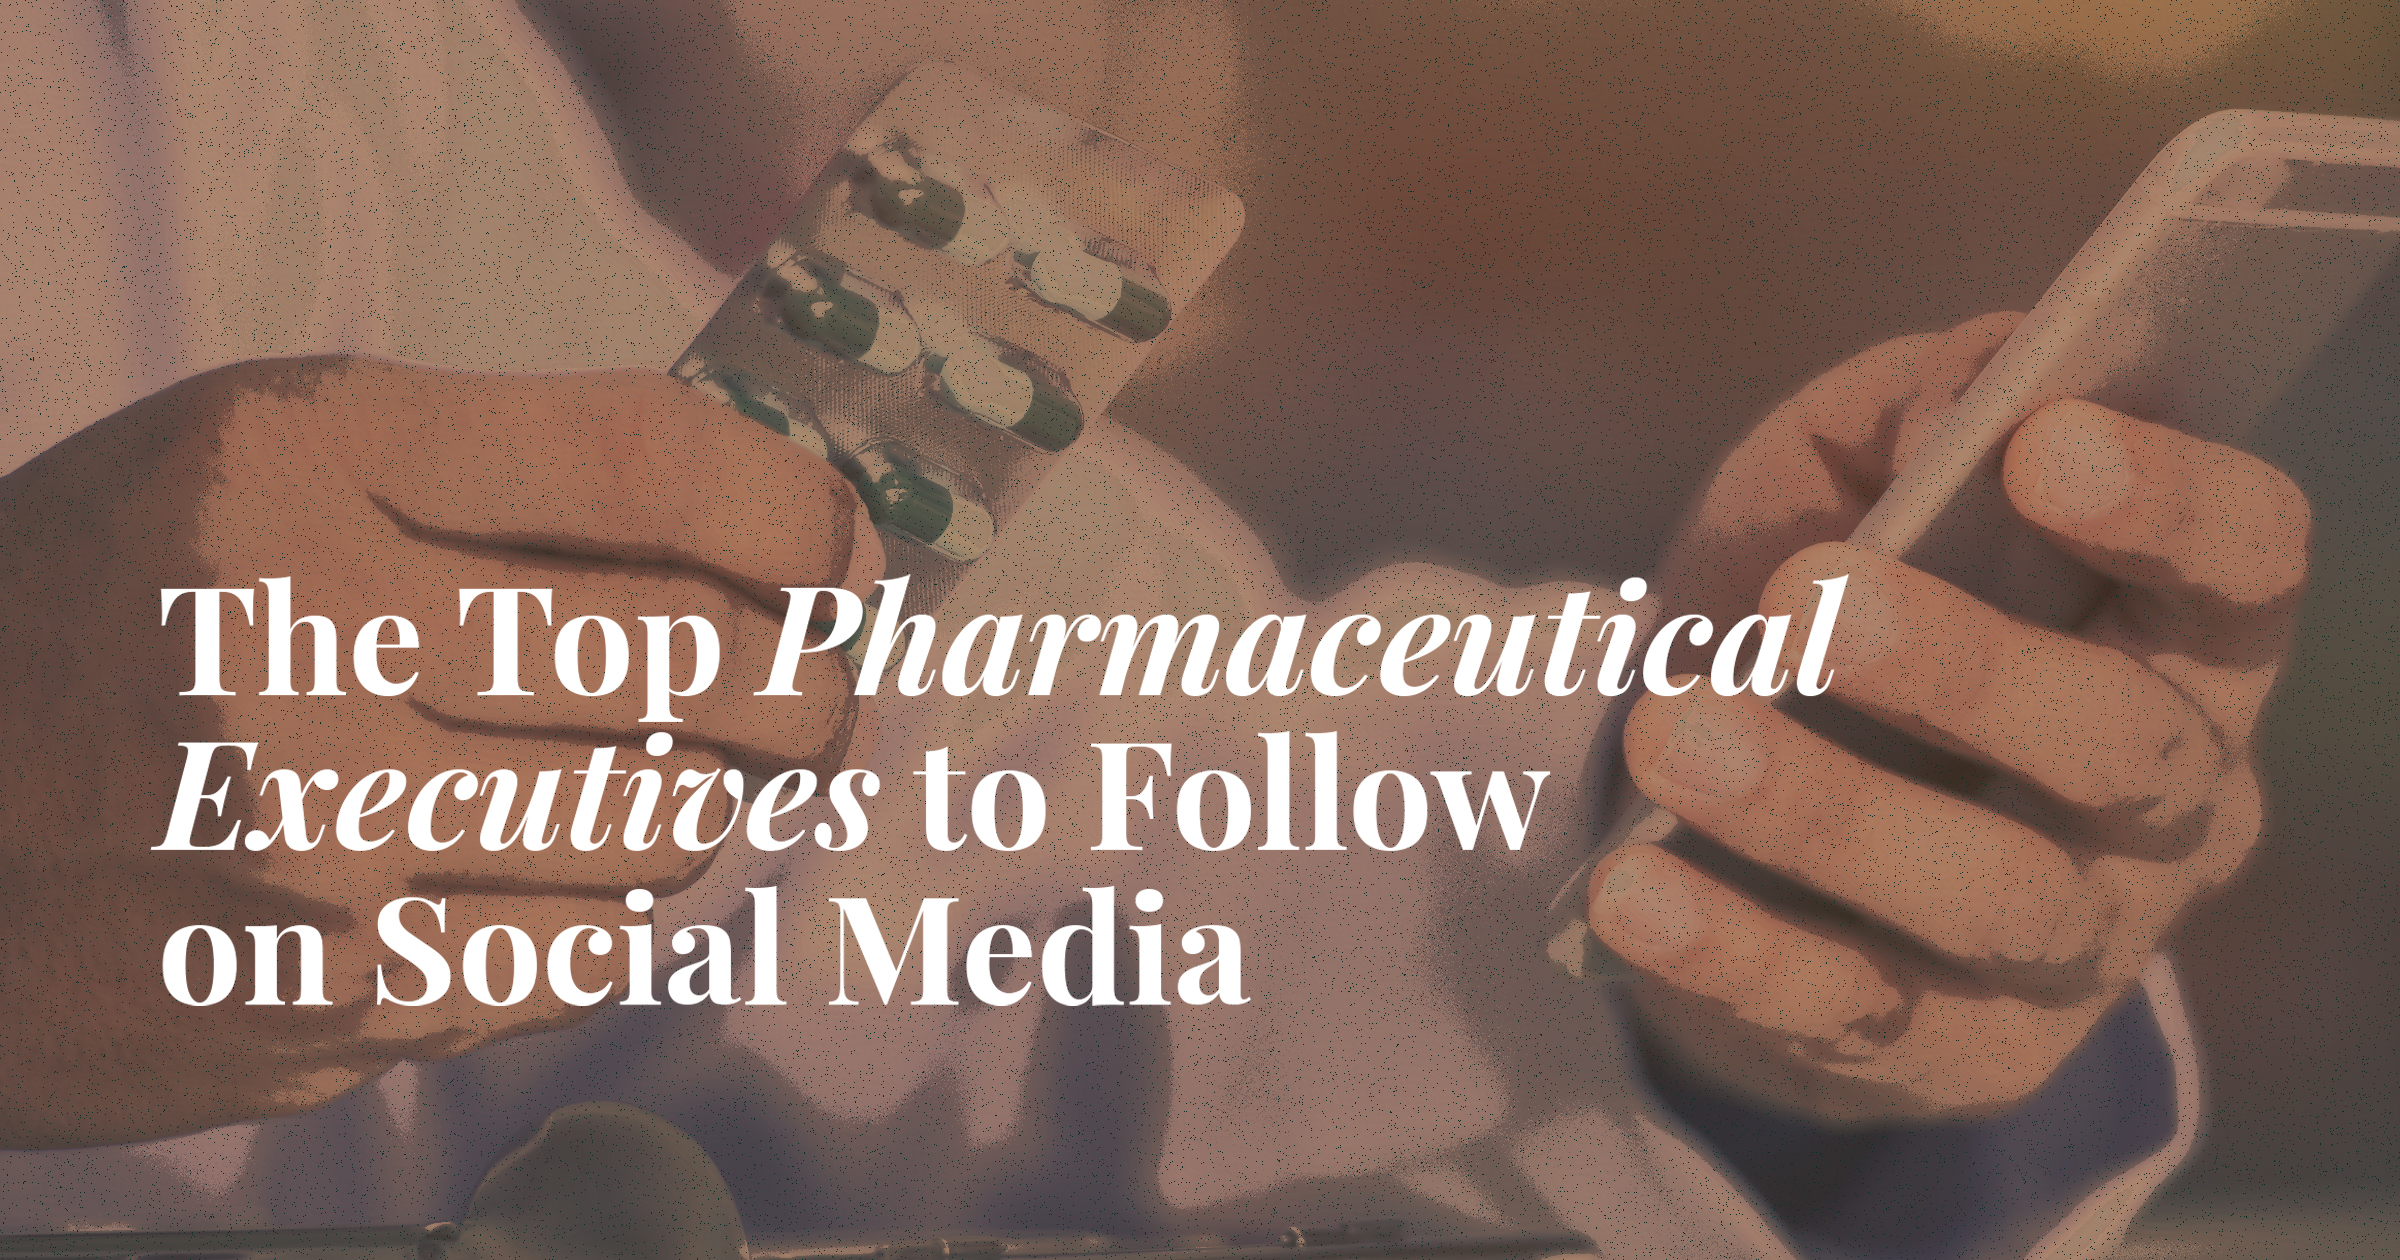 The Top Pharmaceutical Executives to Follow on Social Media